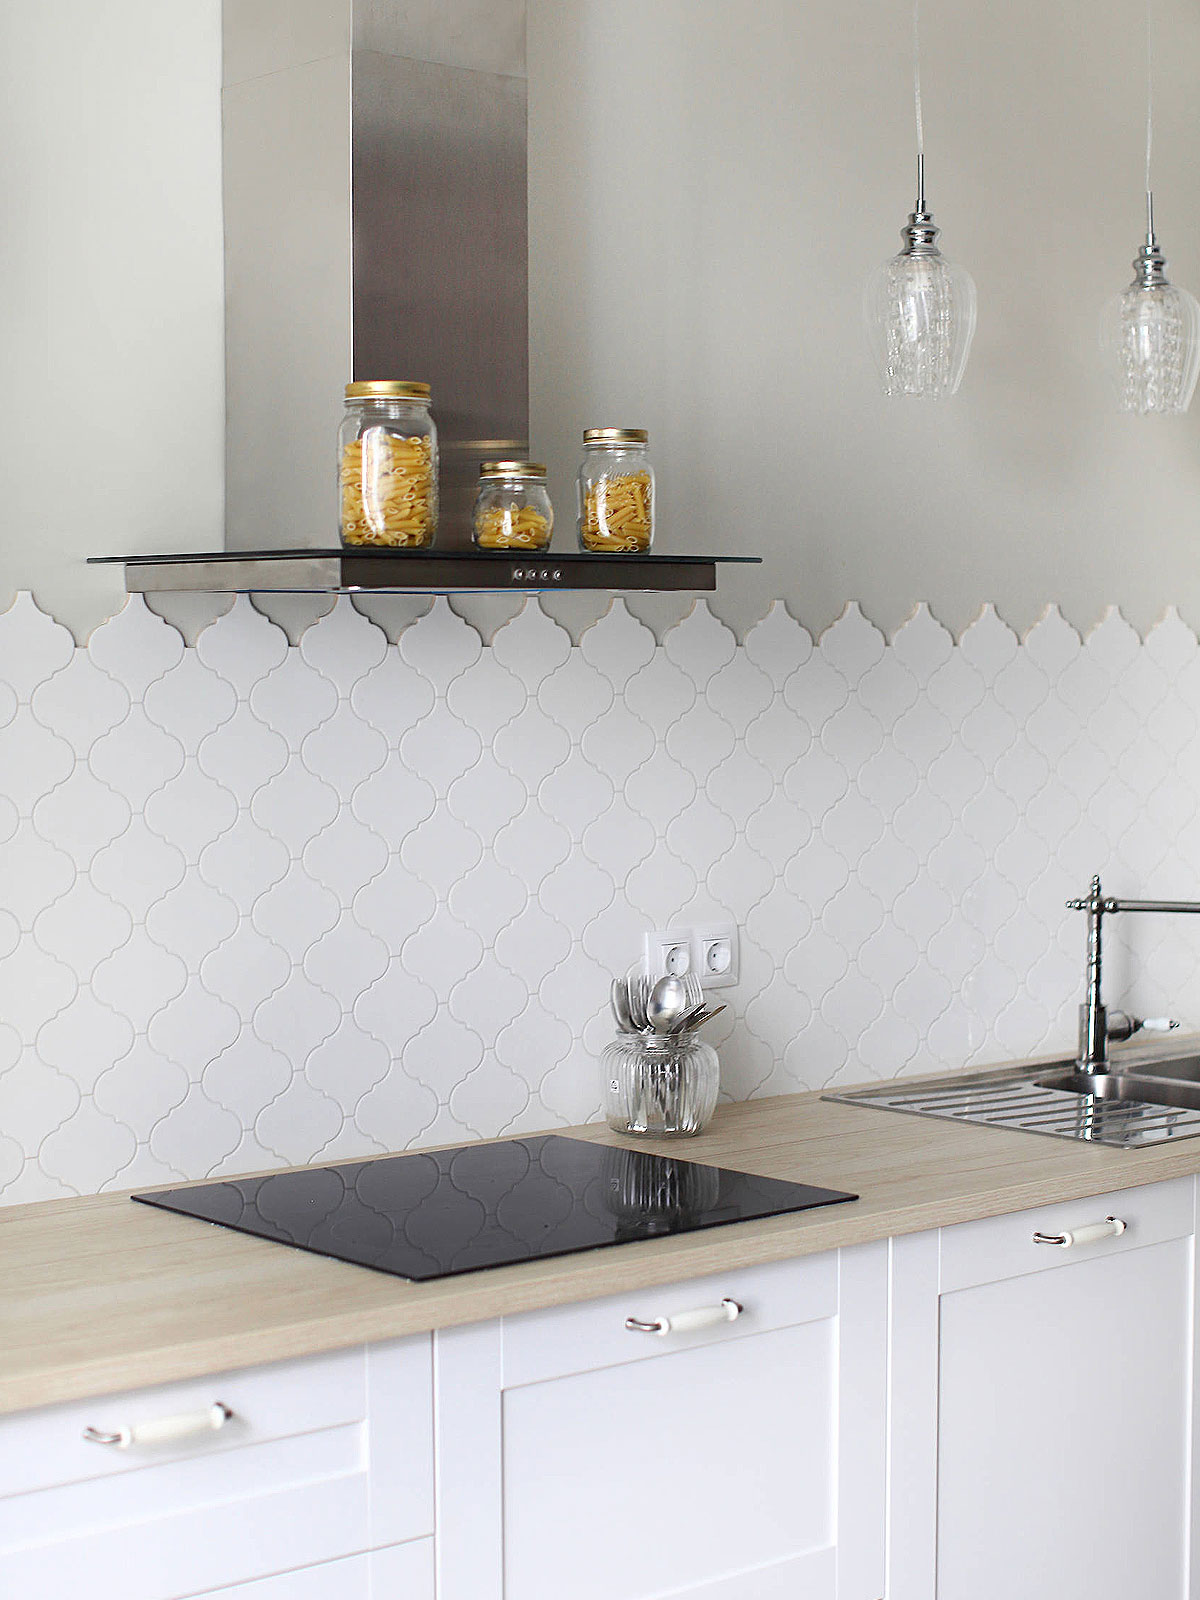 White arabesque backsplash tile woo countertop cabinet